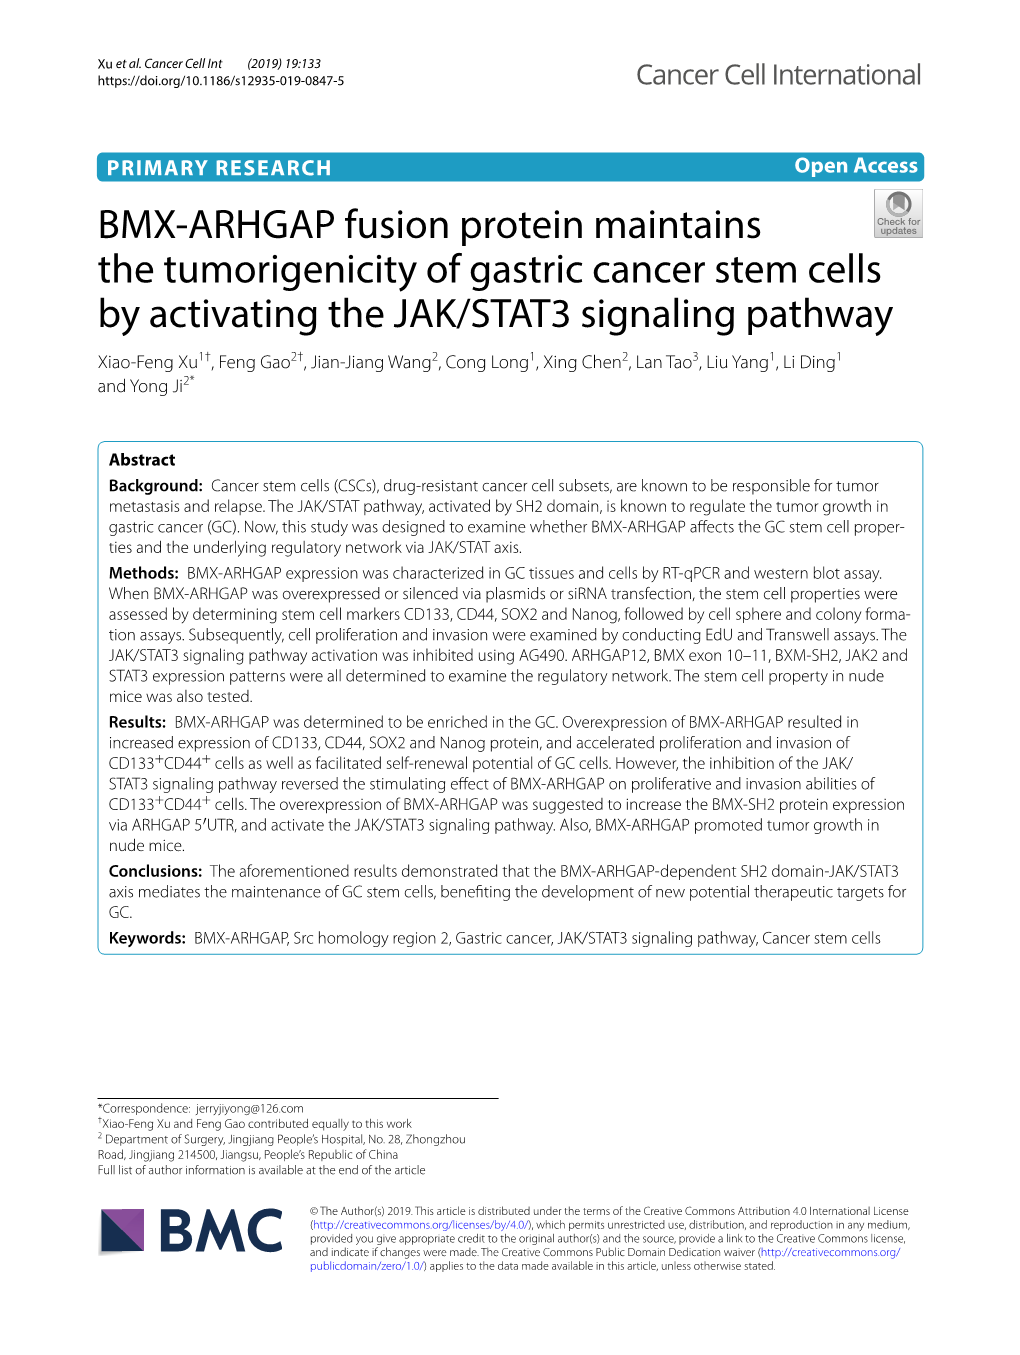 BMX-ARHGAP Fusion Protein Maintains the Tumorigenicity Of